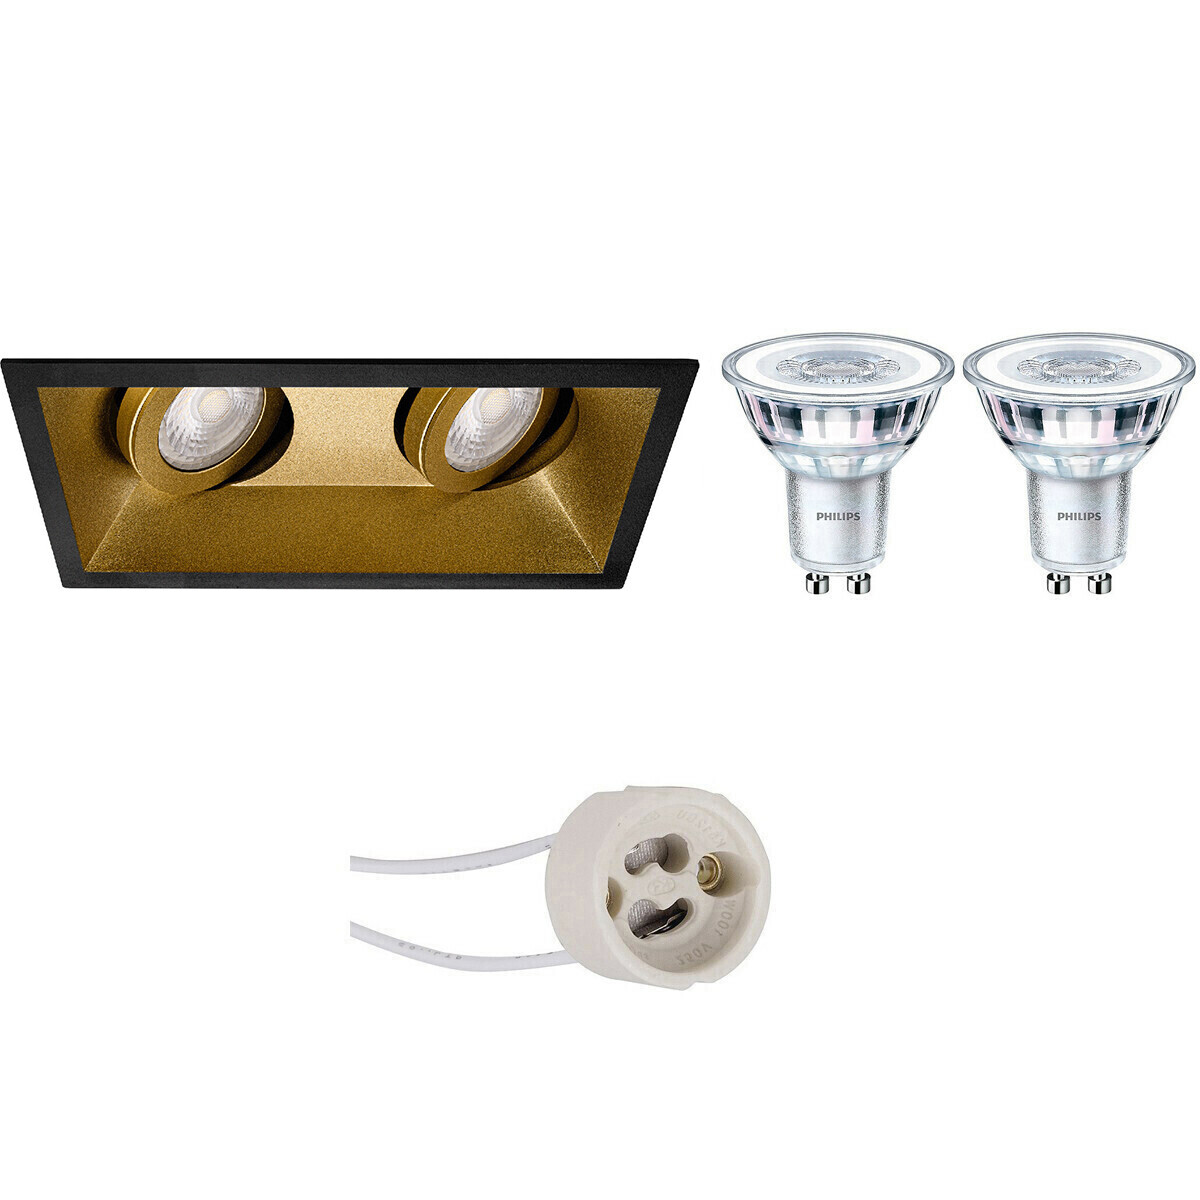 BES LED LED Spot Set - Pragmi Zano Pro - GU10 Fitting - Inbouw Rechthoek Dubbel - Mat Zwart/Goud - Kantelbaar - 185x93mm - Philips - CorePro 830 36D - 5W - Warm Wit 3000K - Dimbaar